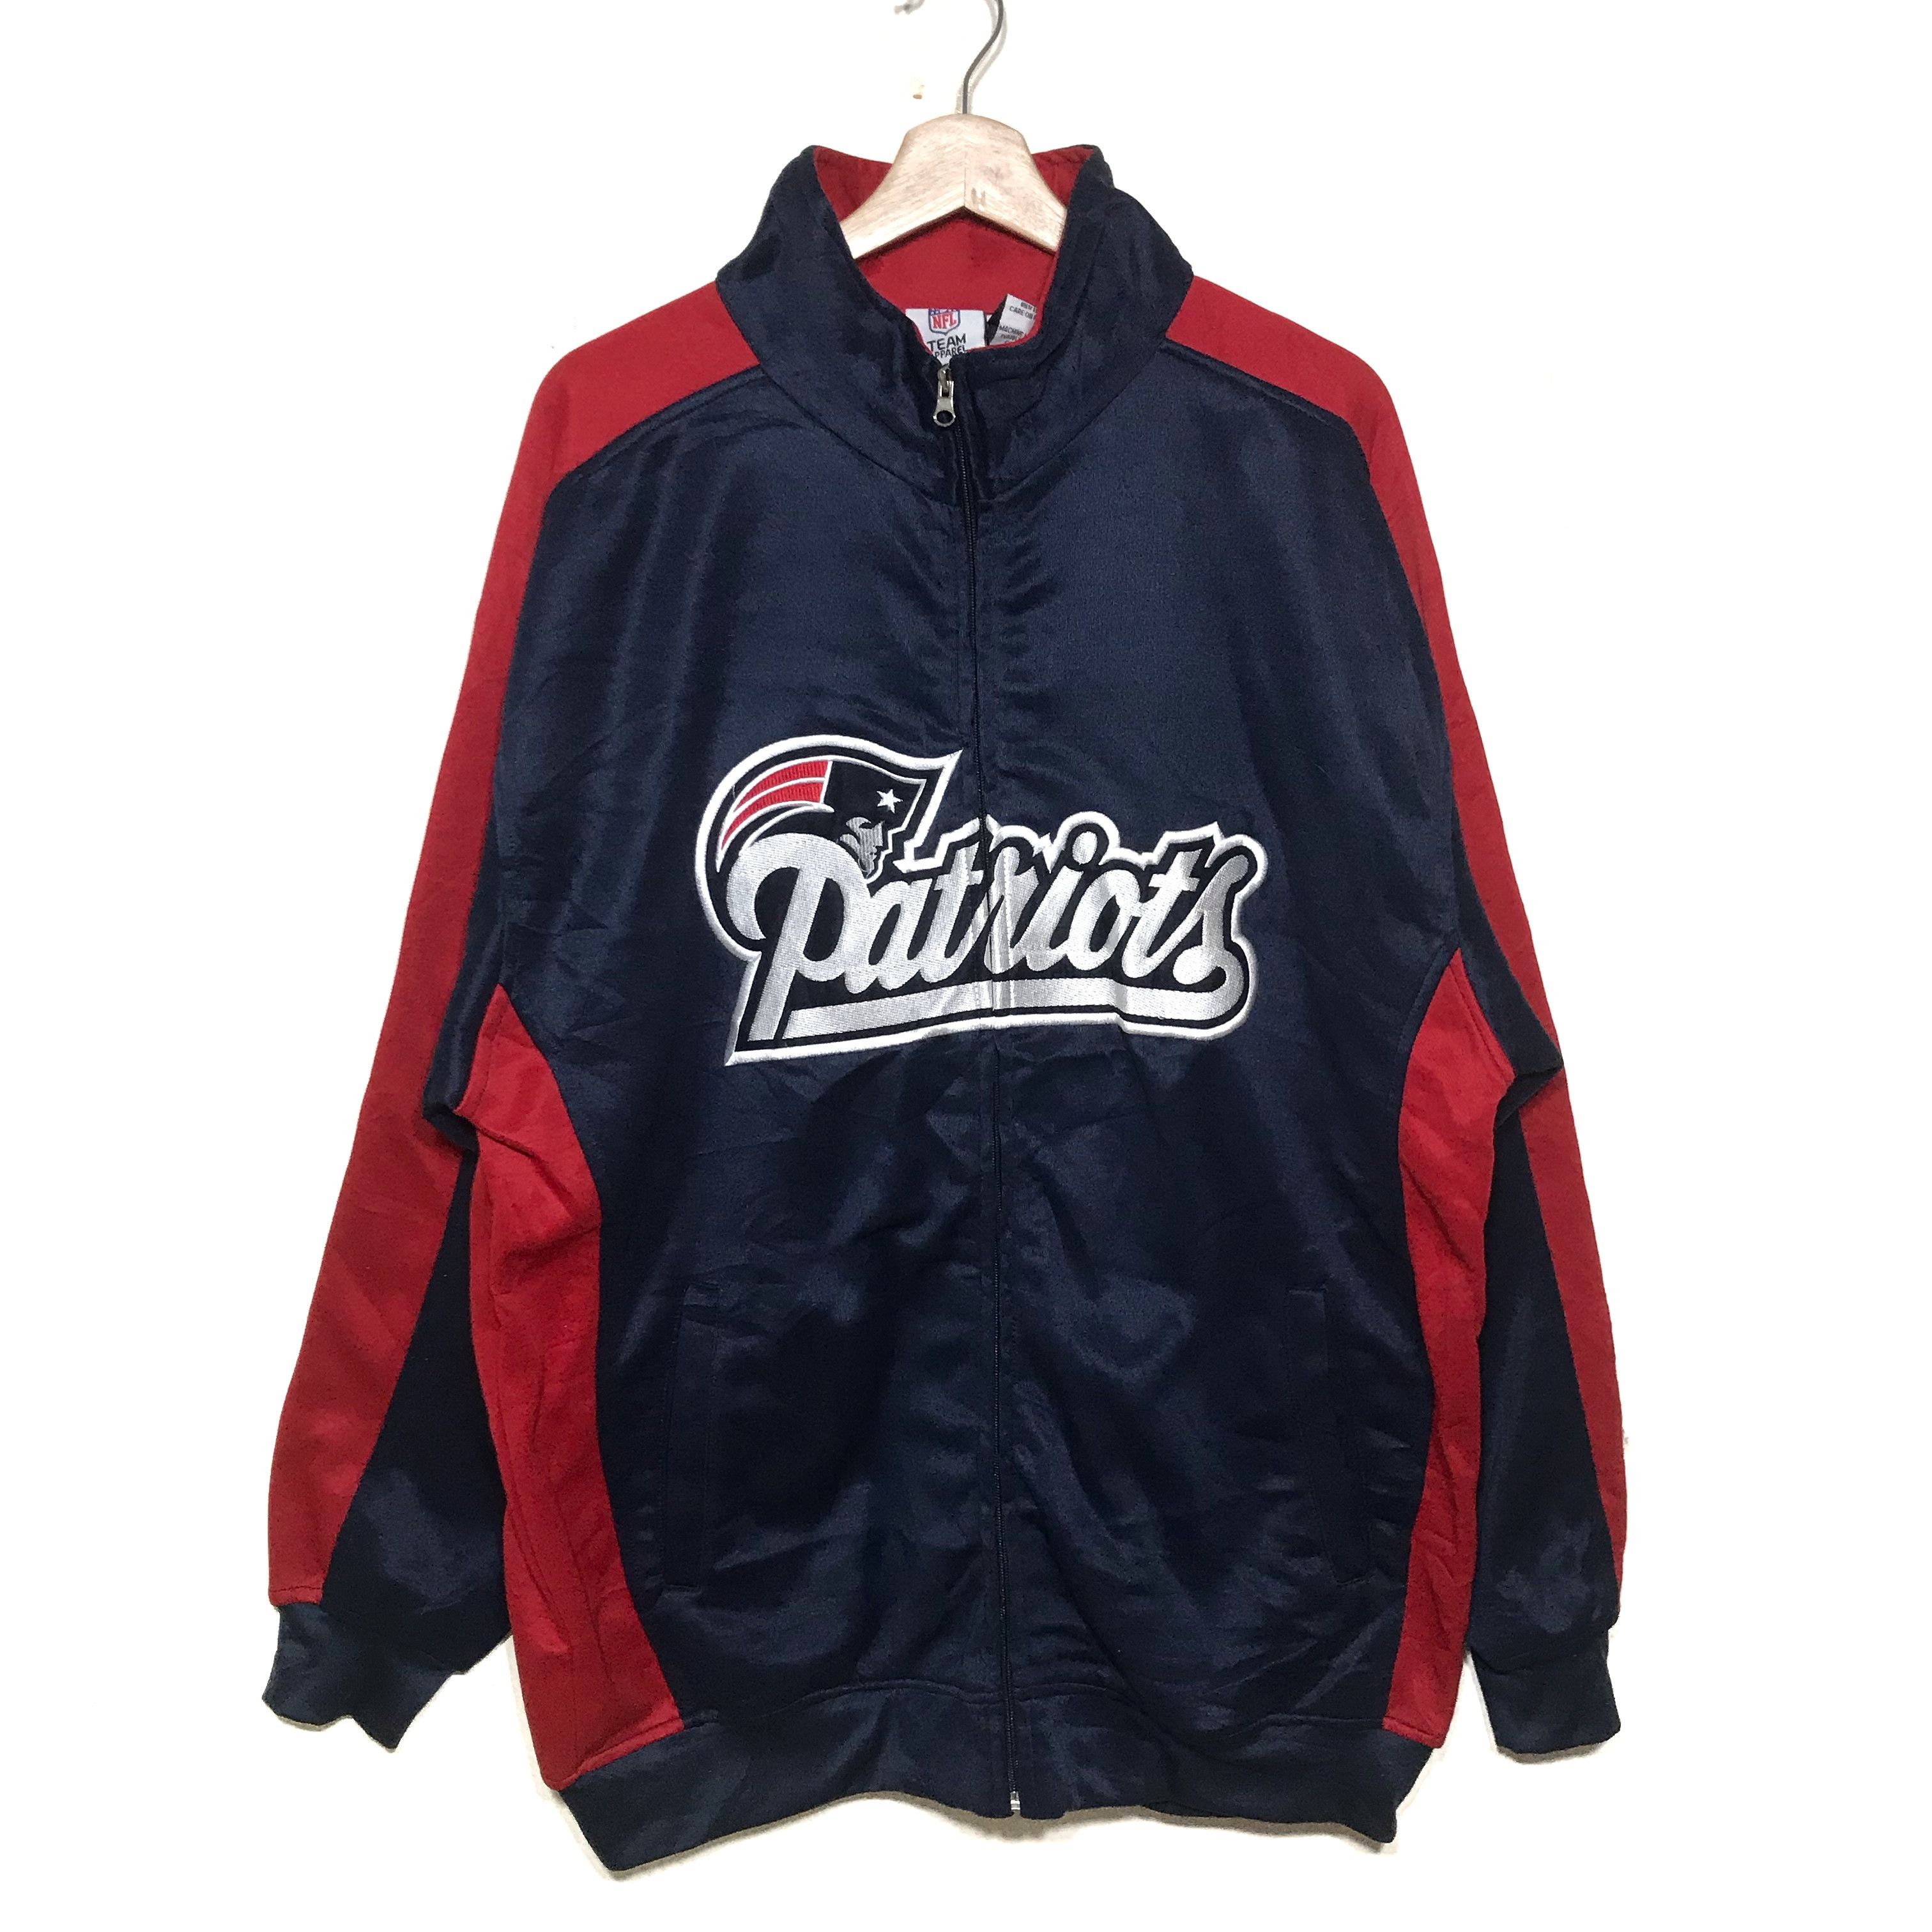 Vintage 90s Starter NFL New England Patriots Rare Pullover Sweatshirt  Medium M